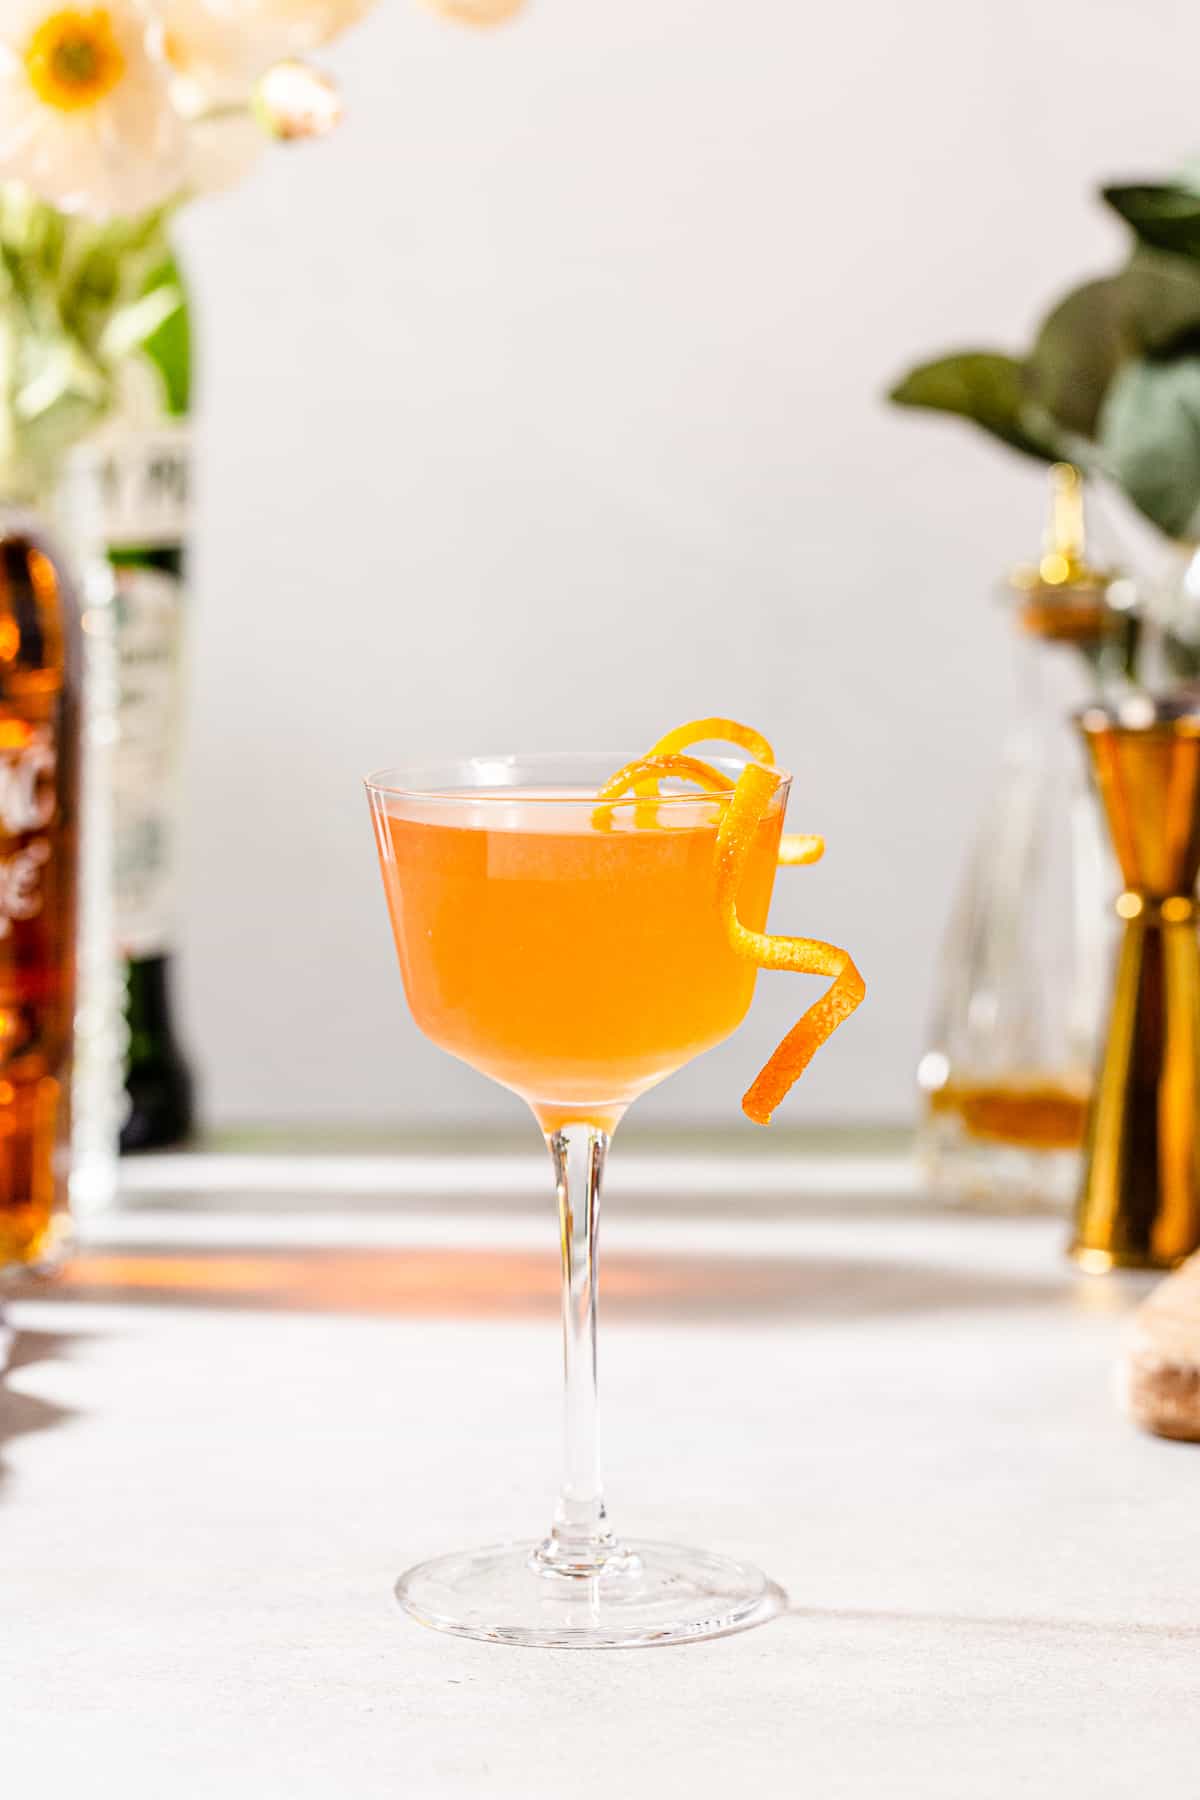 scofflaw cocktail ready to serve with orange garnish.